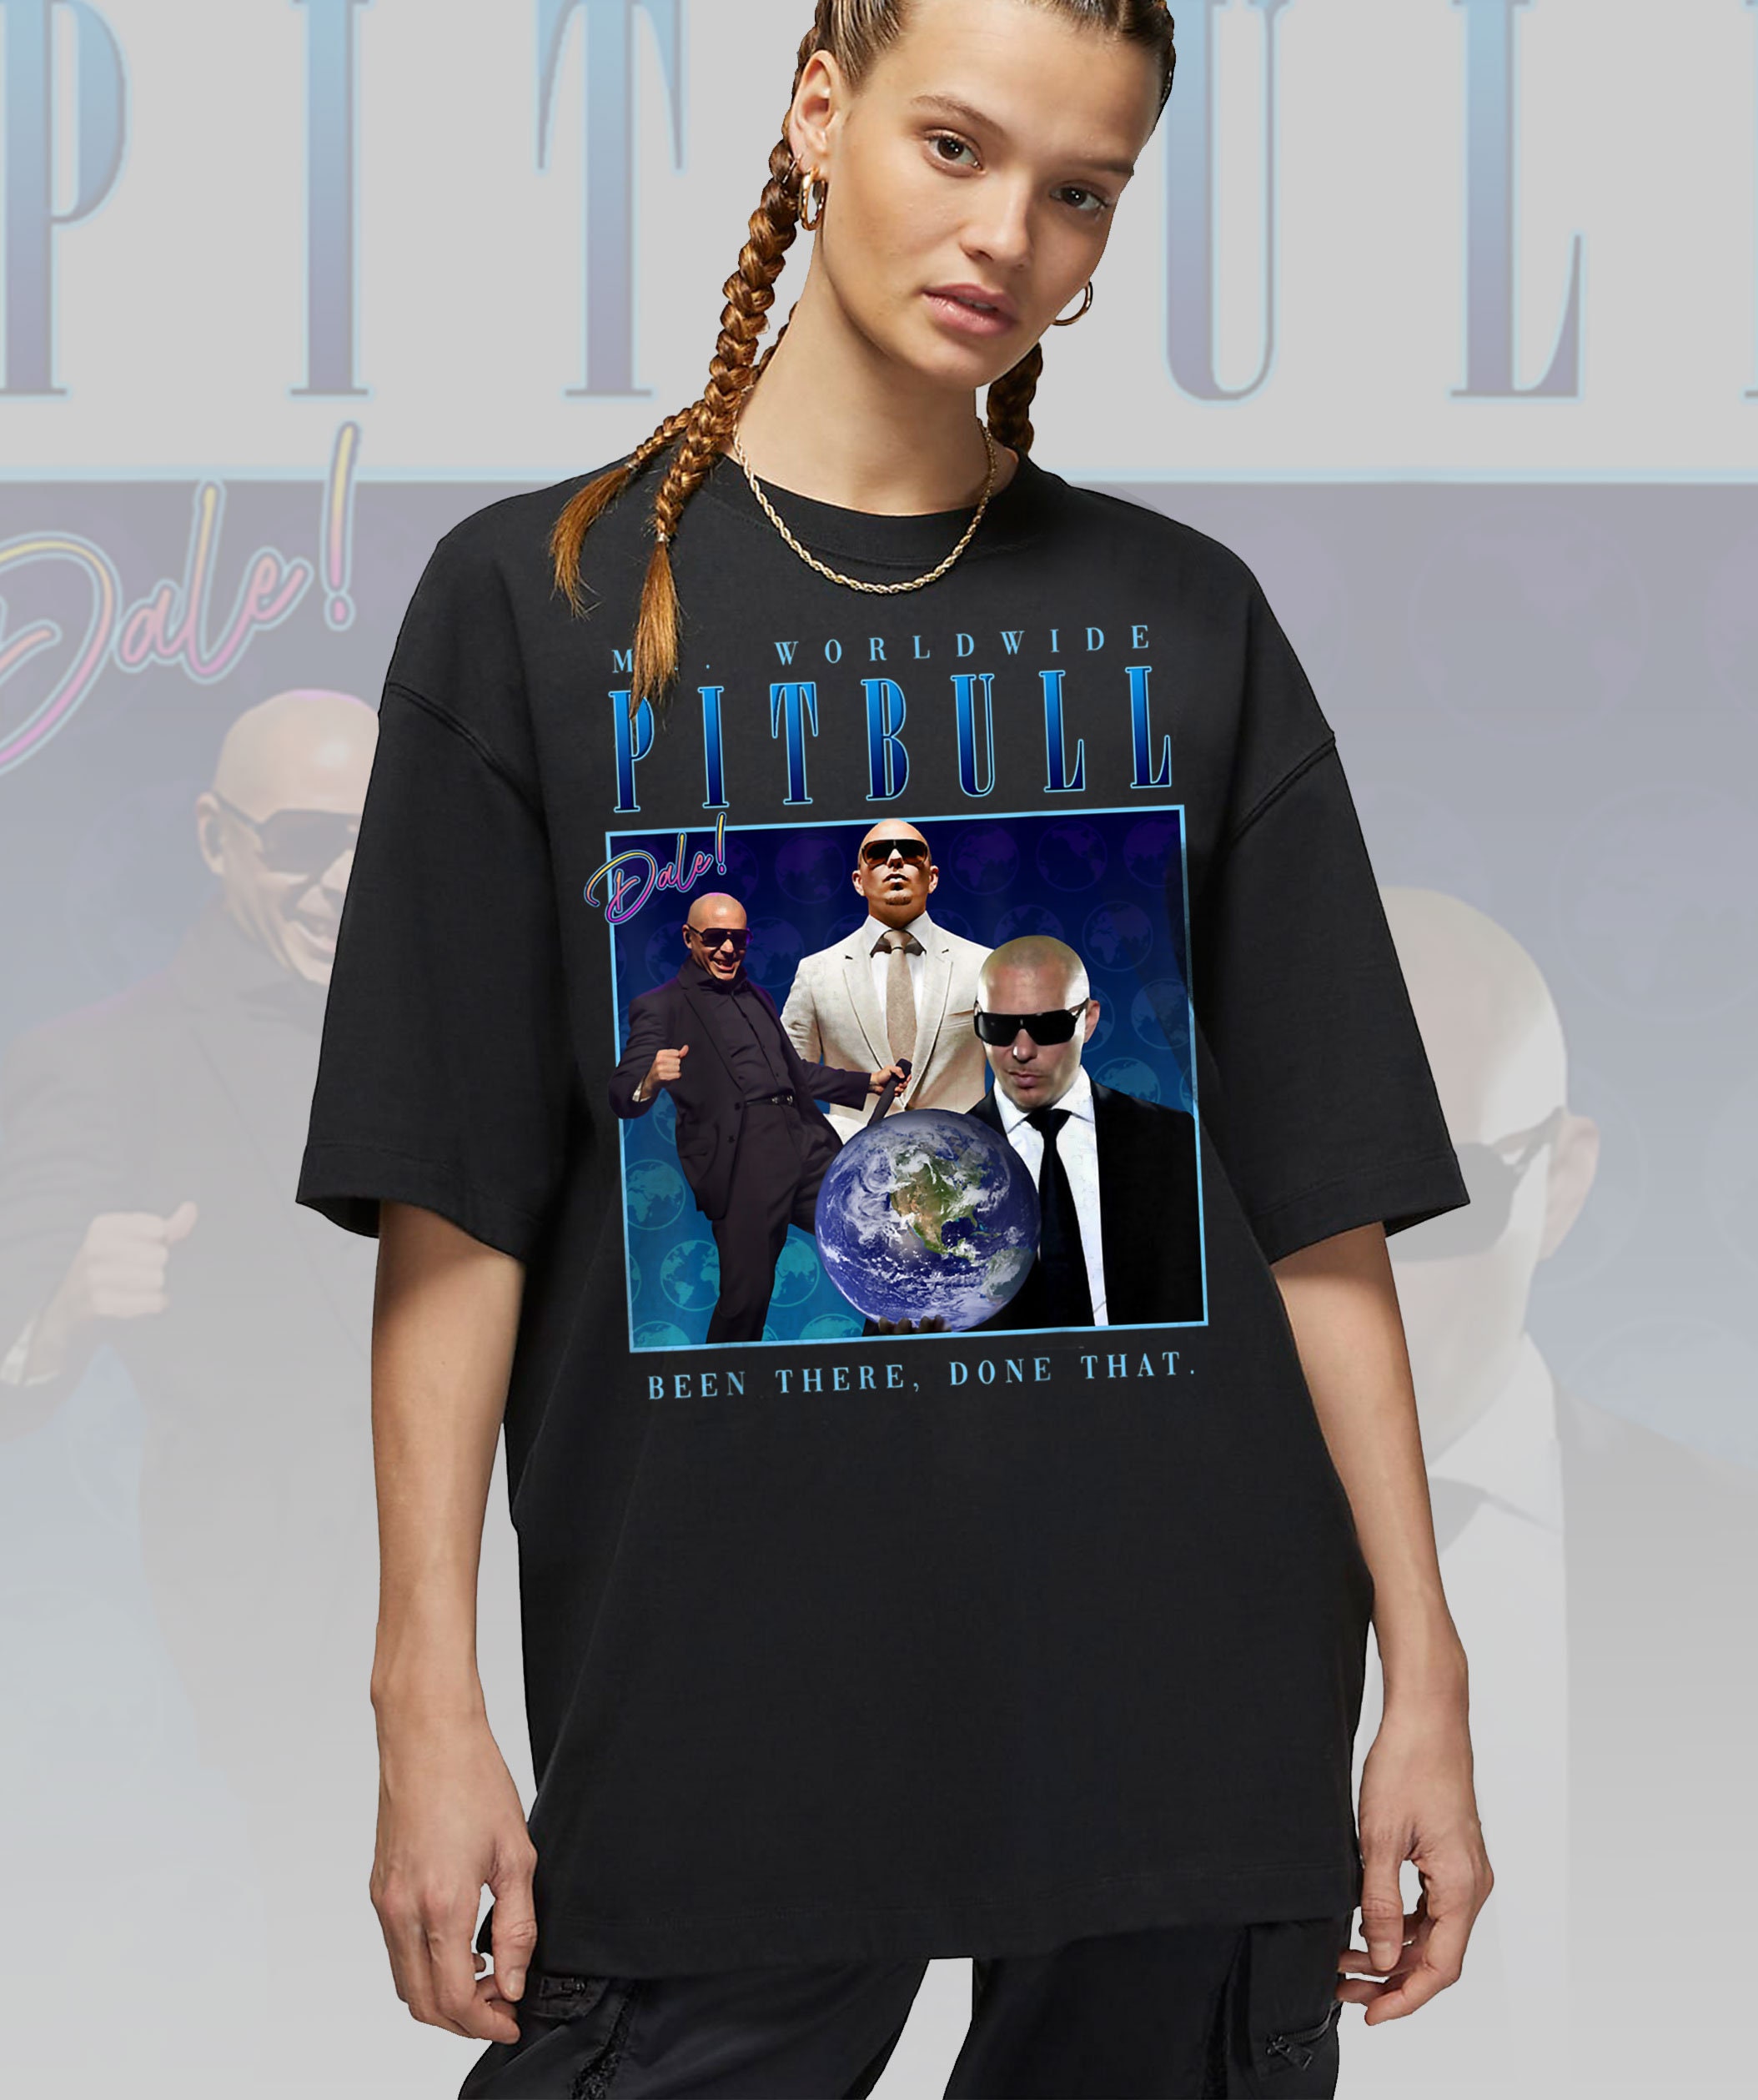 Discover Mr Worldwide Pitbull Shirt, Armando Cristian Prez Shirt, Pitbull Shirt, Pitbull Homage Shirt, Pitbull Hip Hop Shirt, Pitbull Rapper Shirt